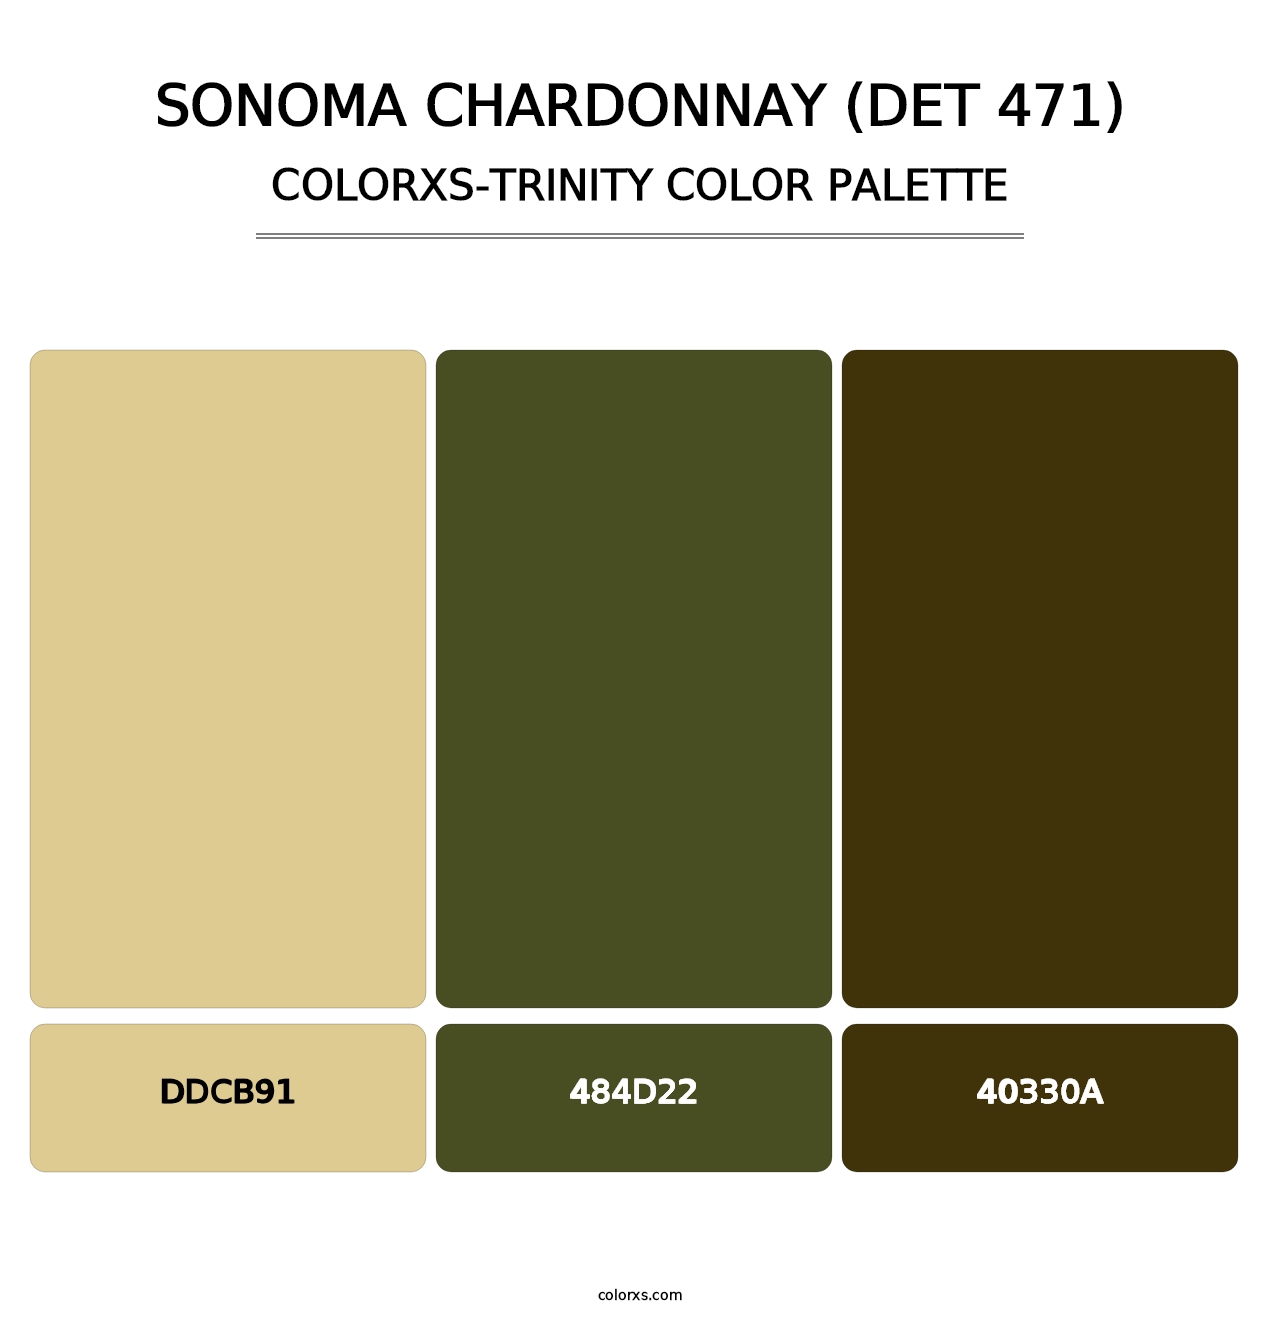 Sonoma Chardonnay (DET 471) - Colorxs Trinity Palette